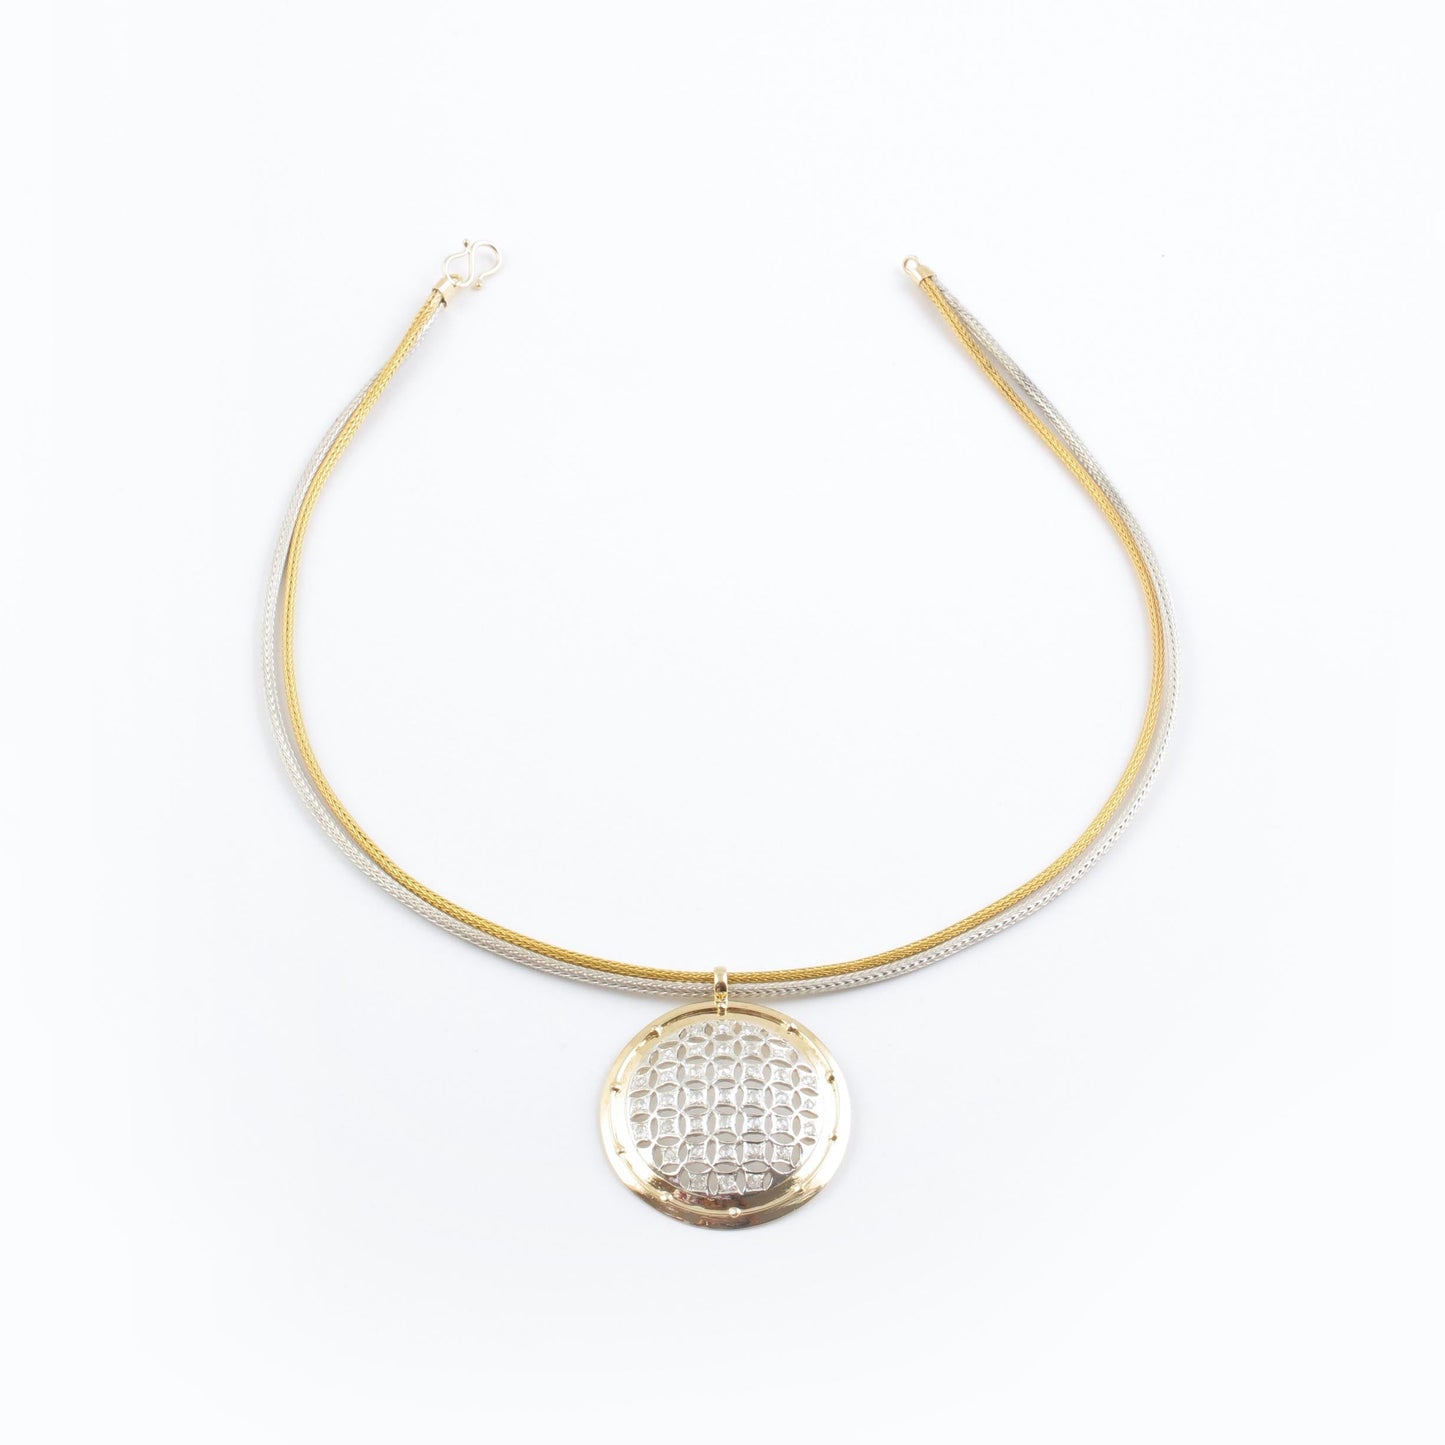 The Abilekha SiGo Silver Gold and Diamond Necklace by Rasvihar